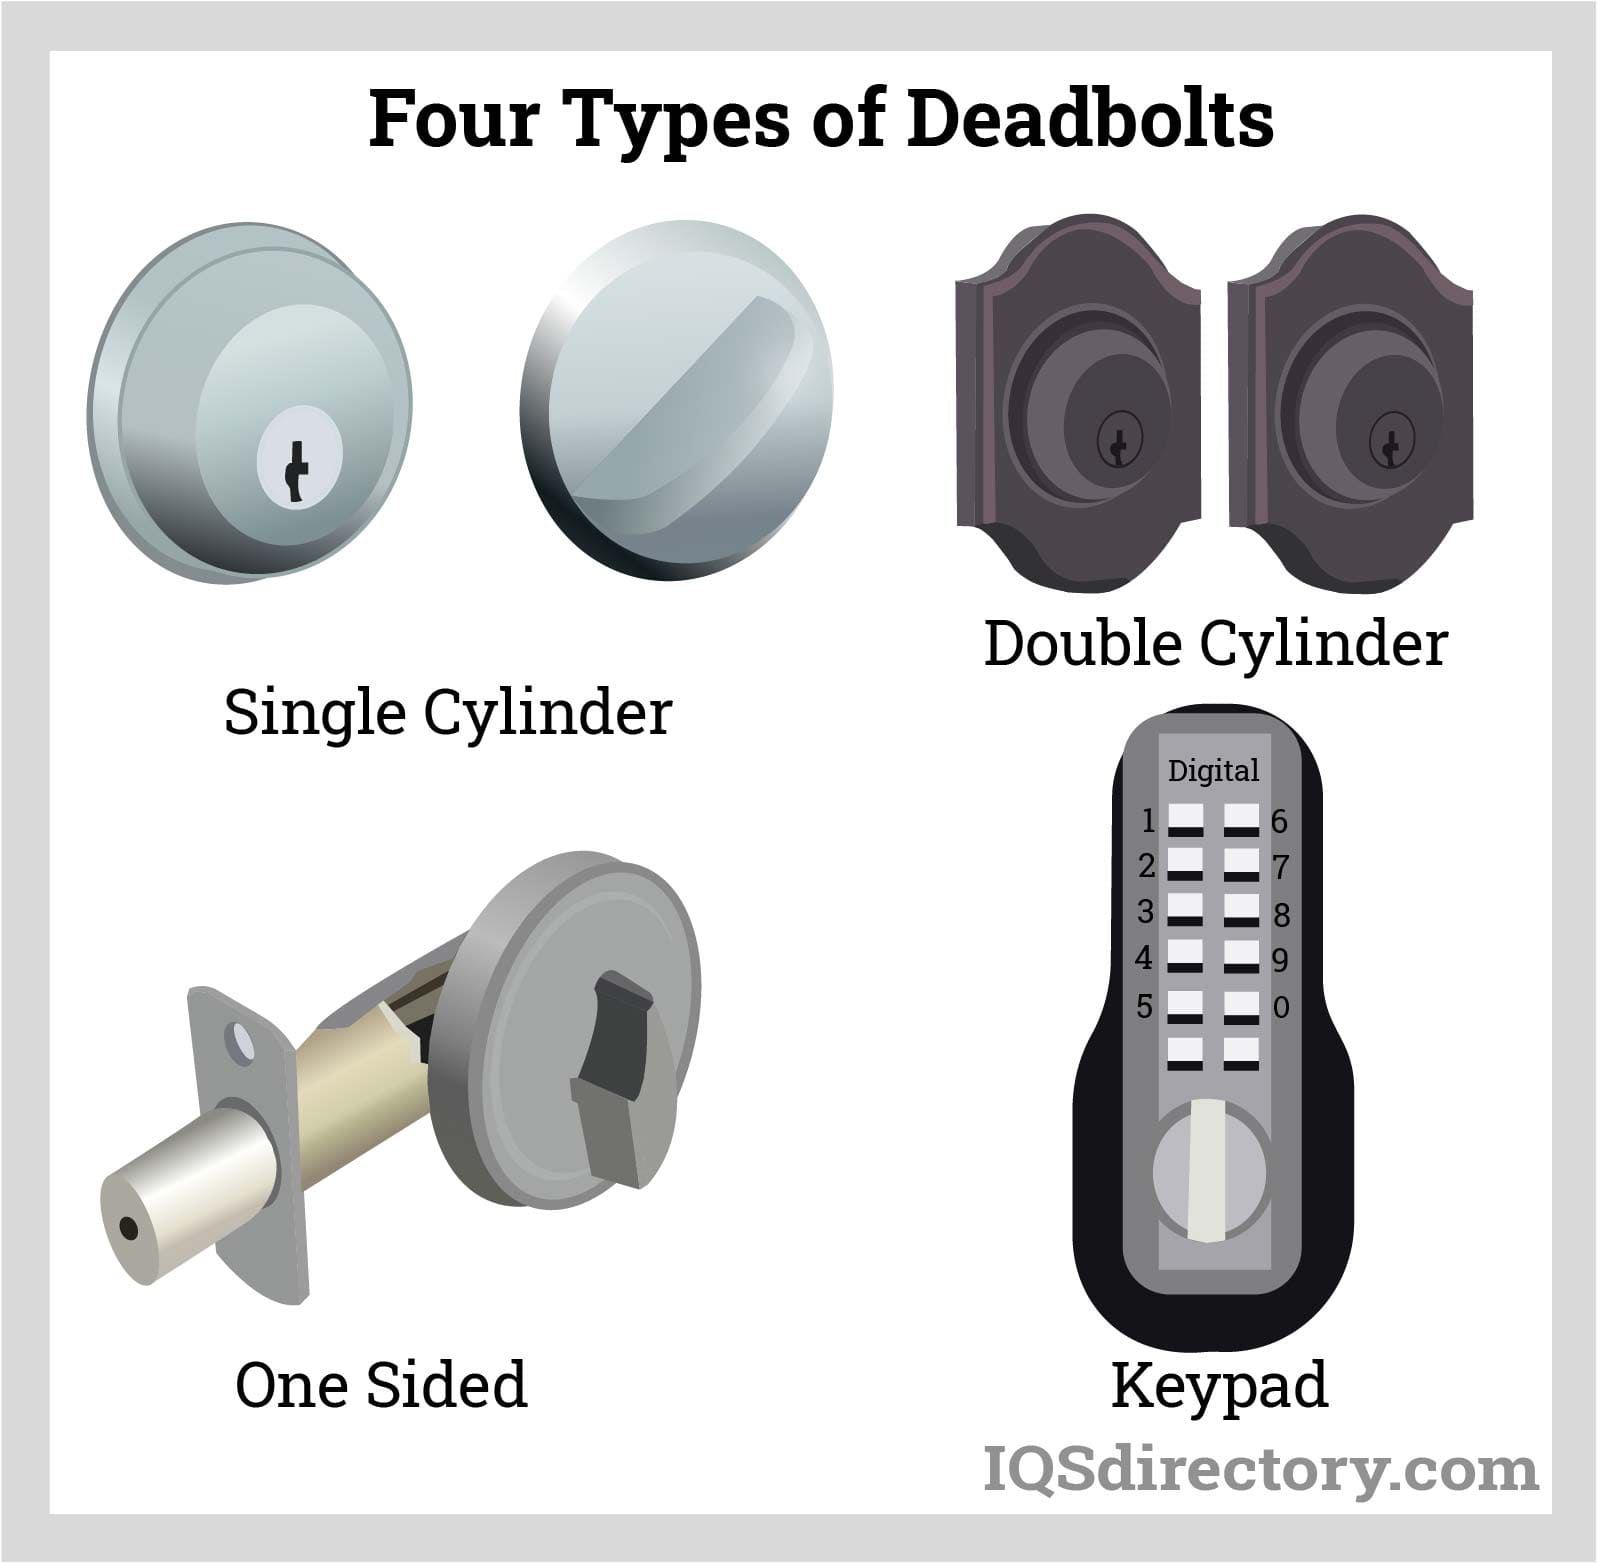 Four Types of Deadbolts